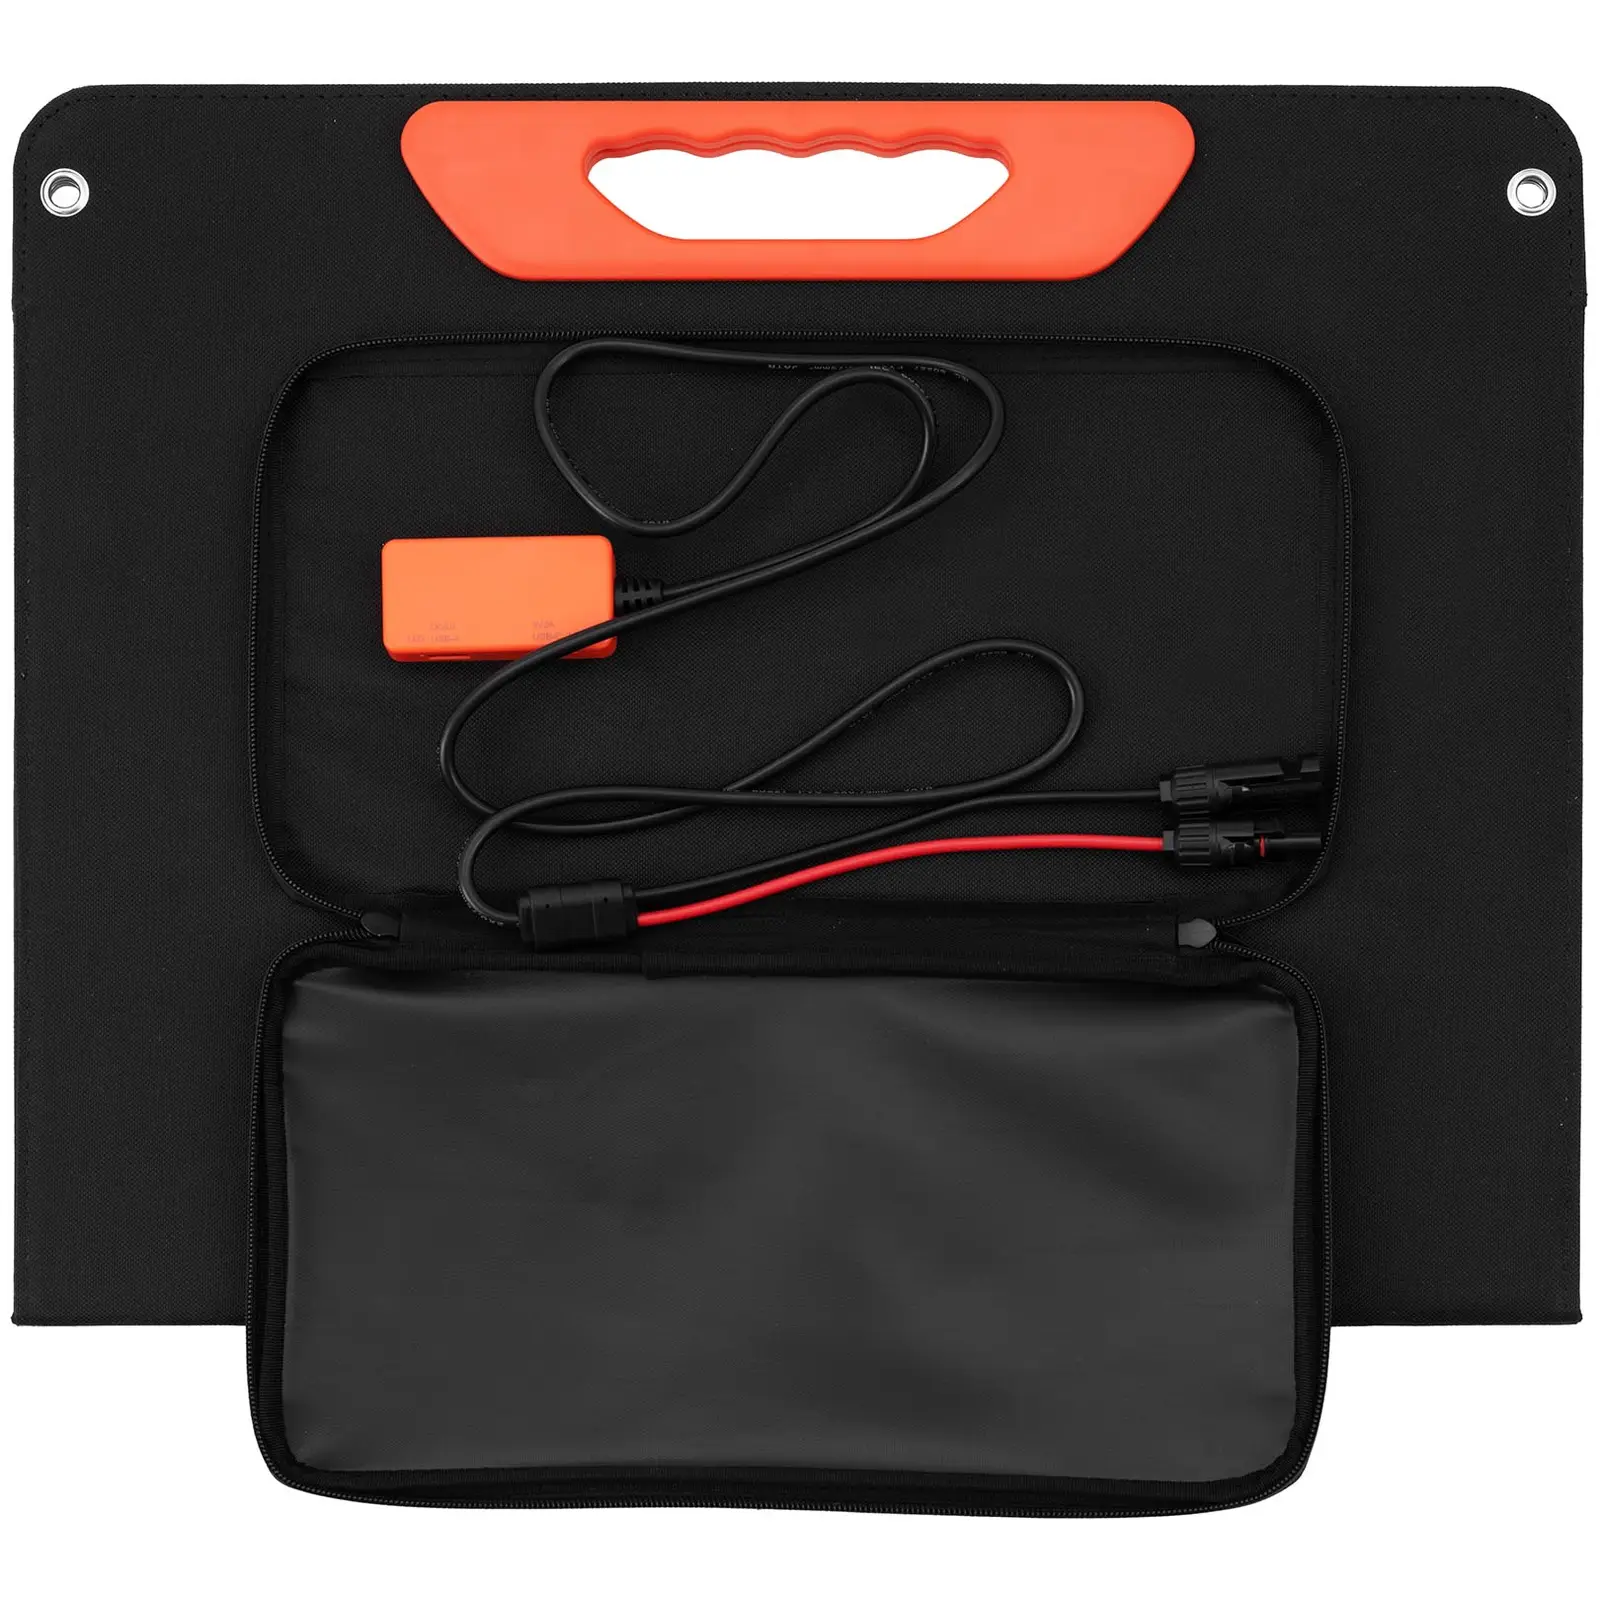 Portable Solar Panel - foldable - 60 W - 2 USB ports